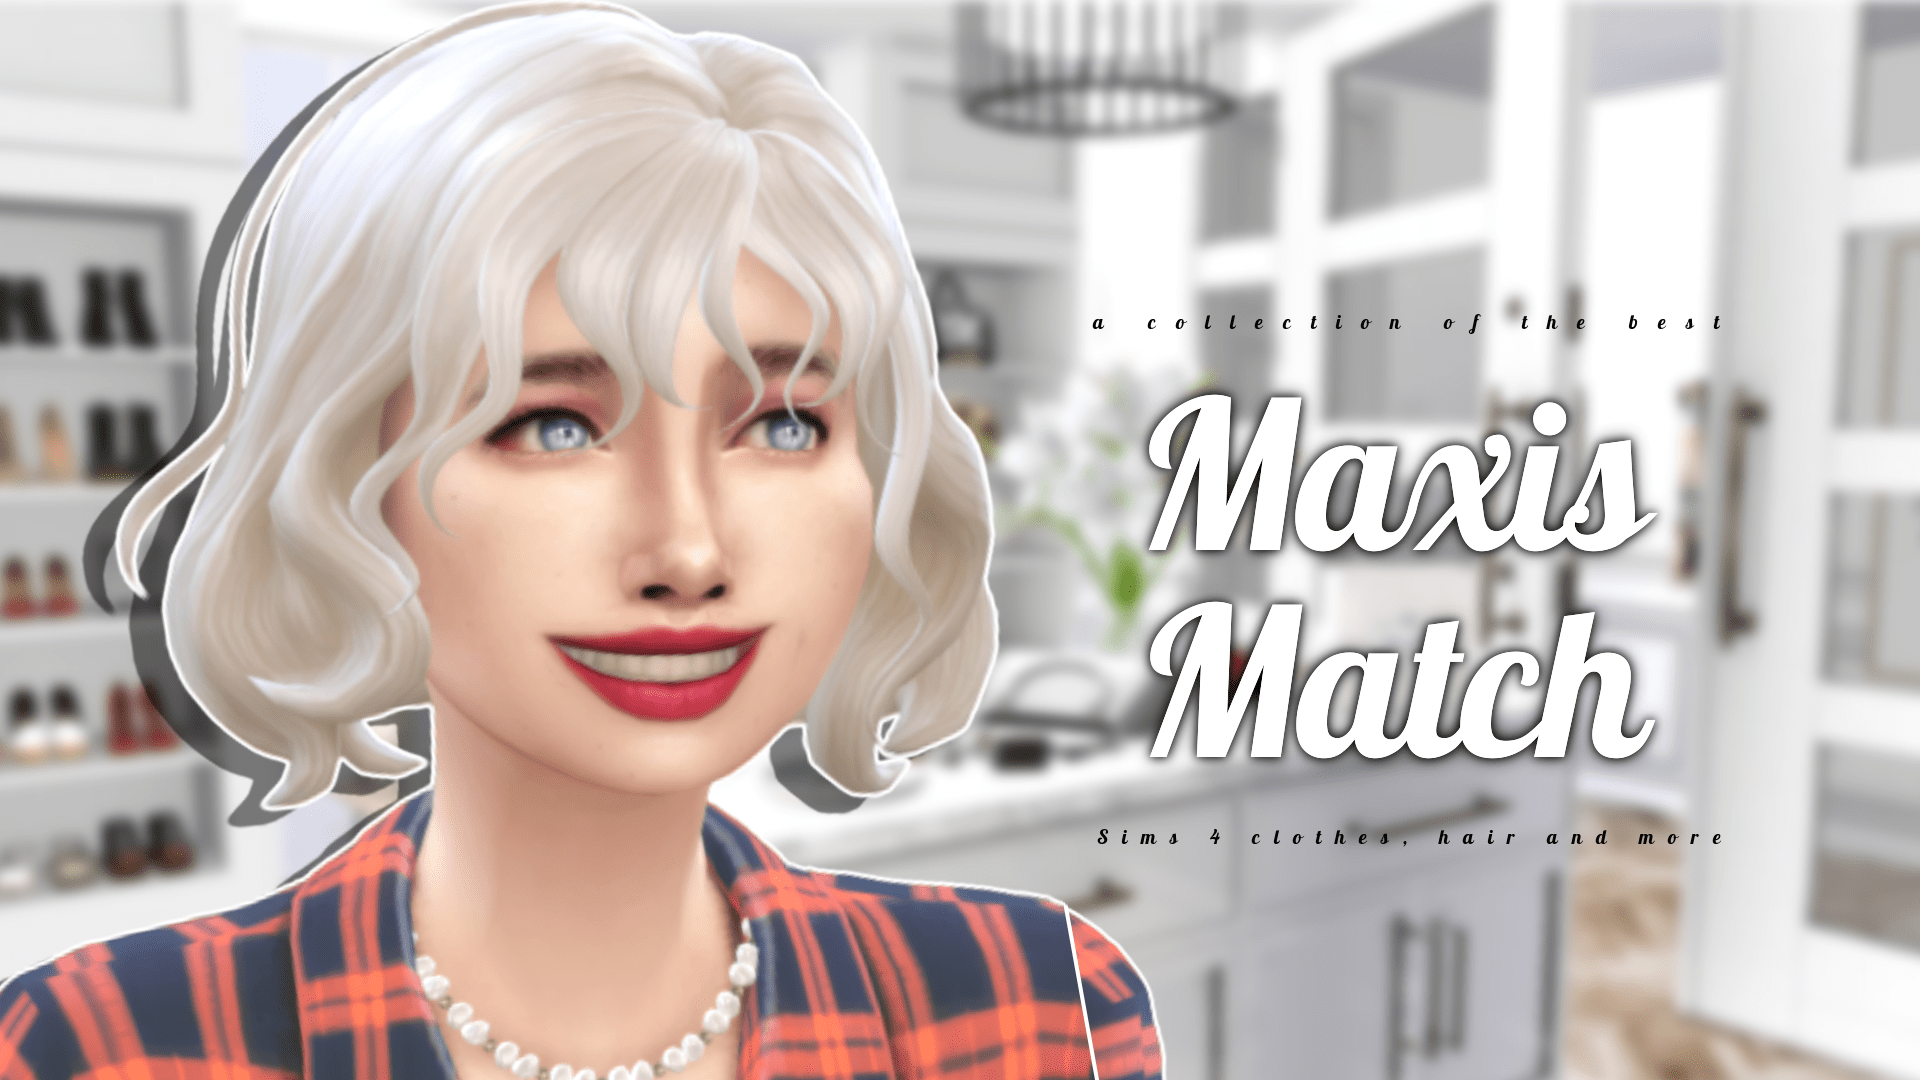 sims 4 maxis match cc folder 2018